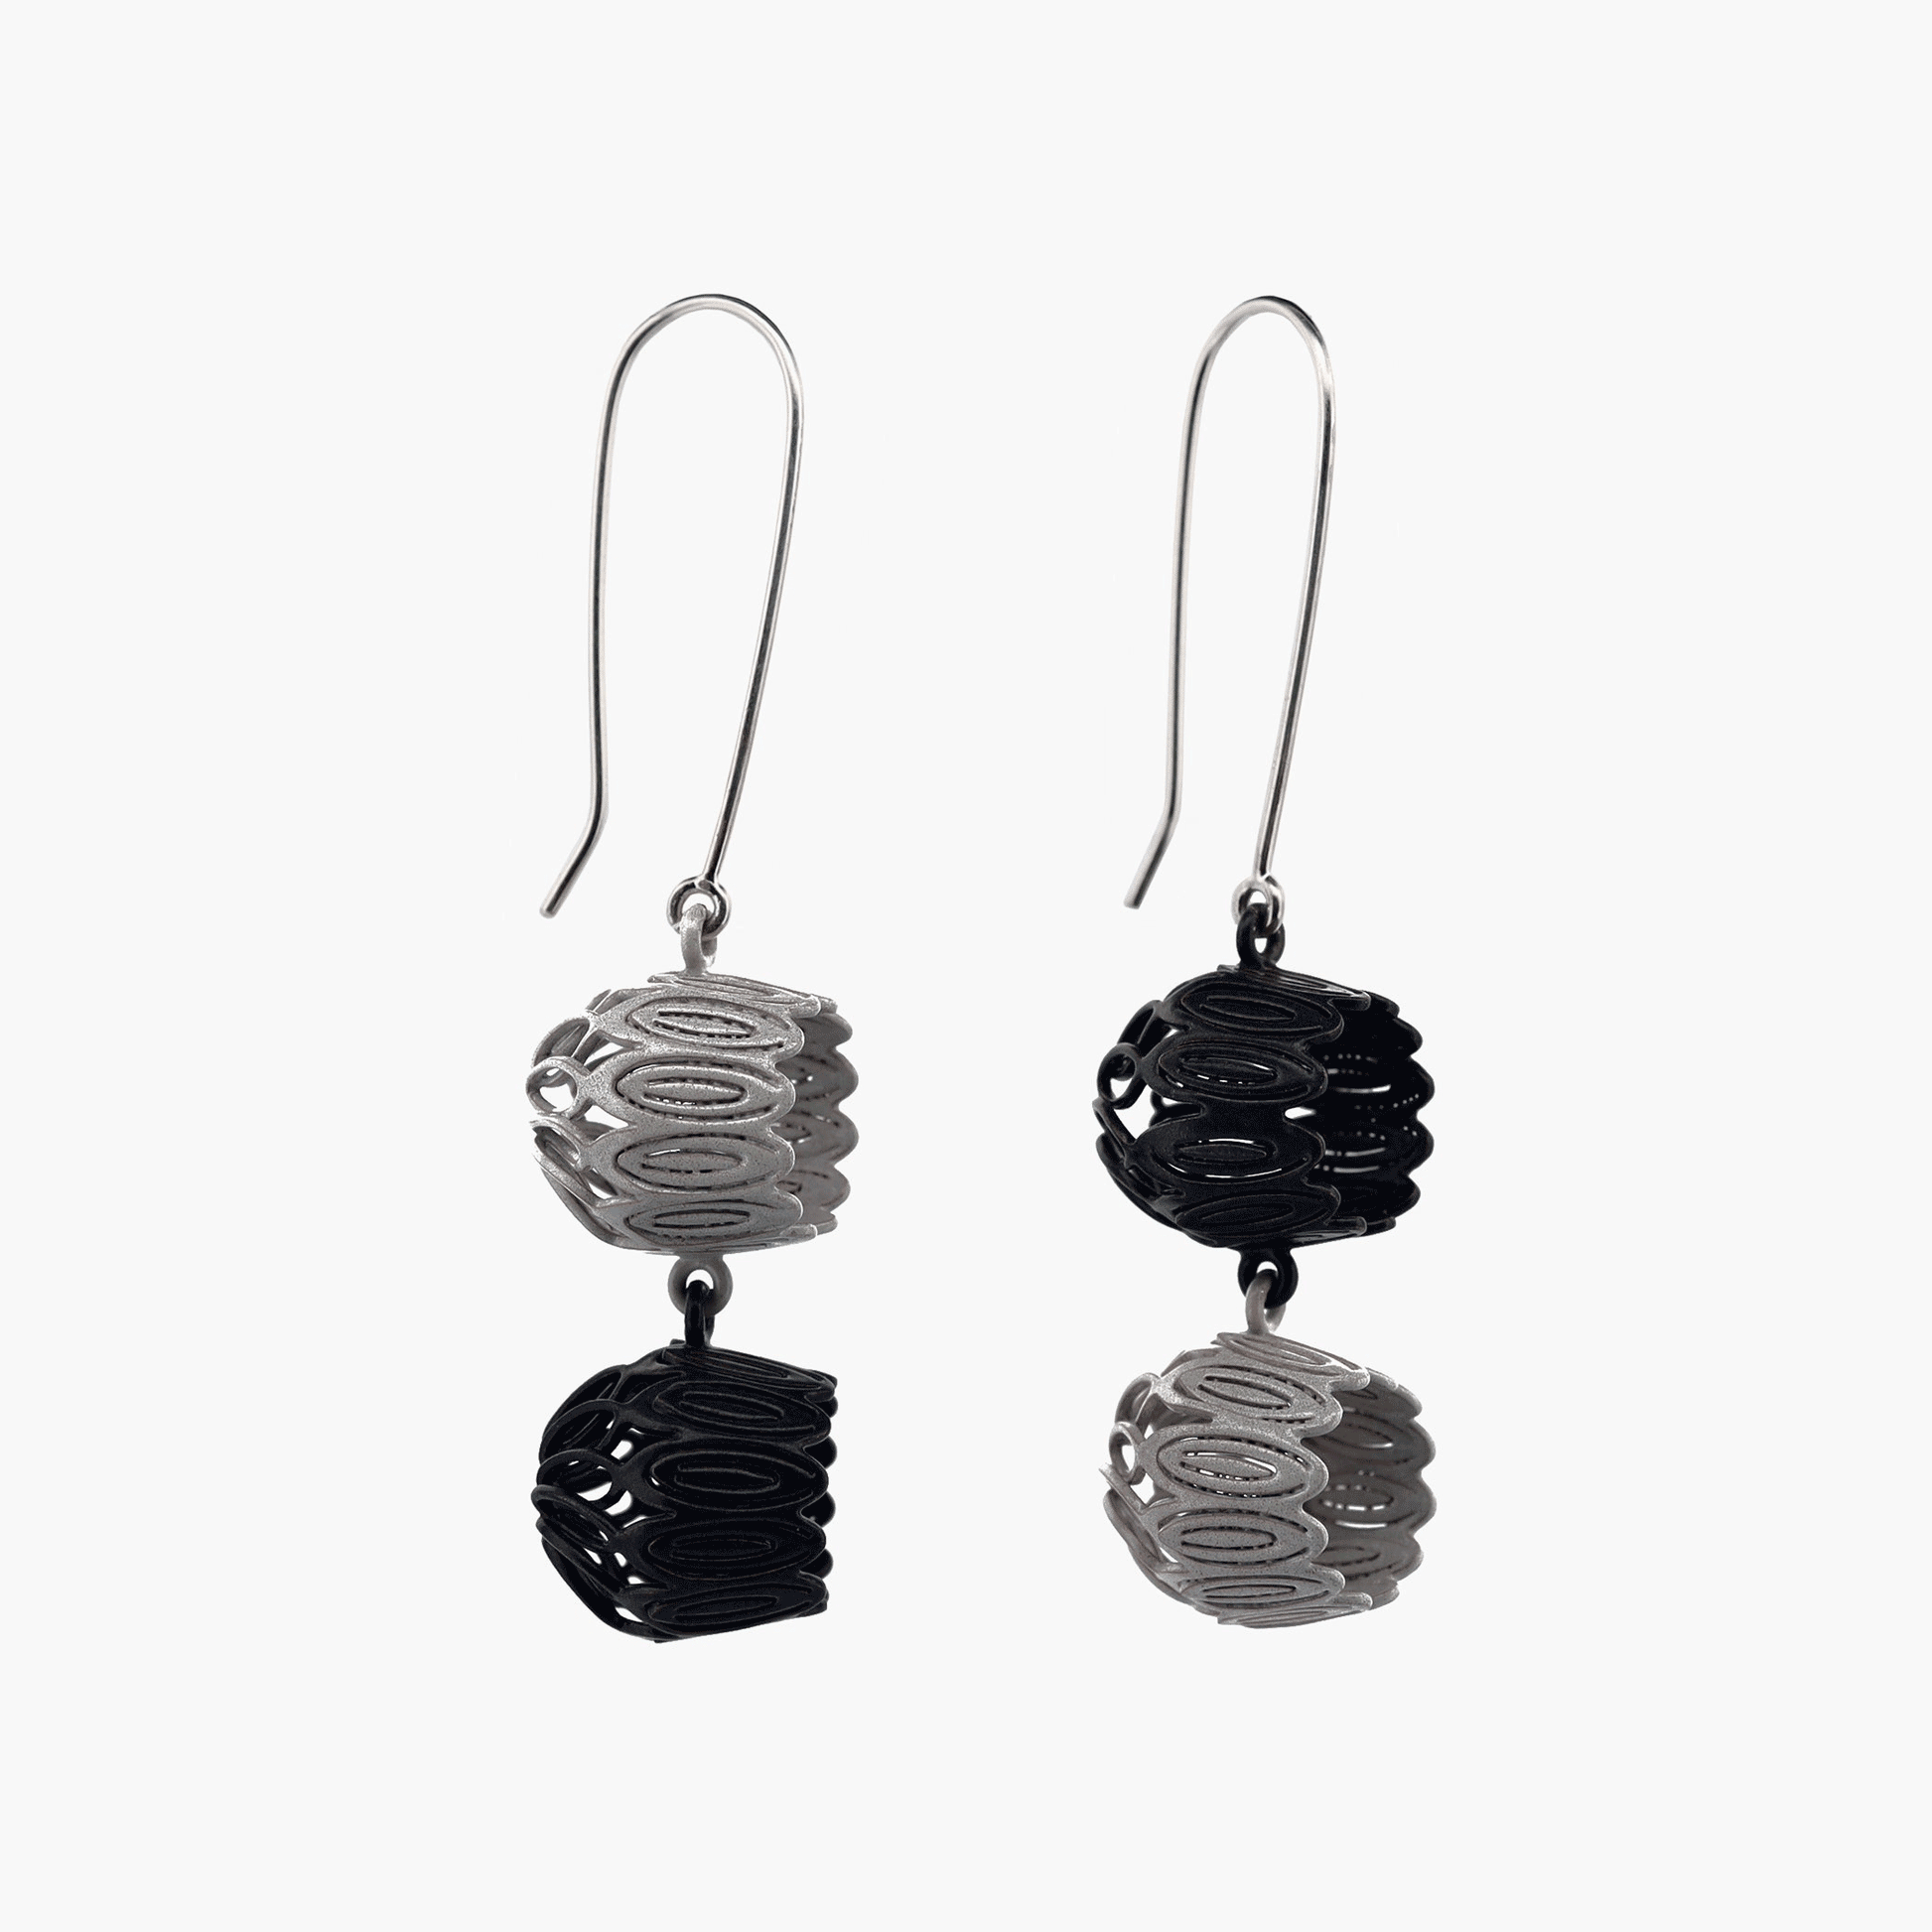 Double Tulip Drop earrings with black and grey tulips, crafted by Sorrel Van Allen in Nova Scotia.